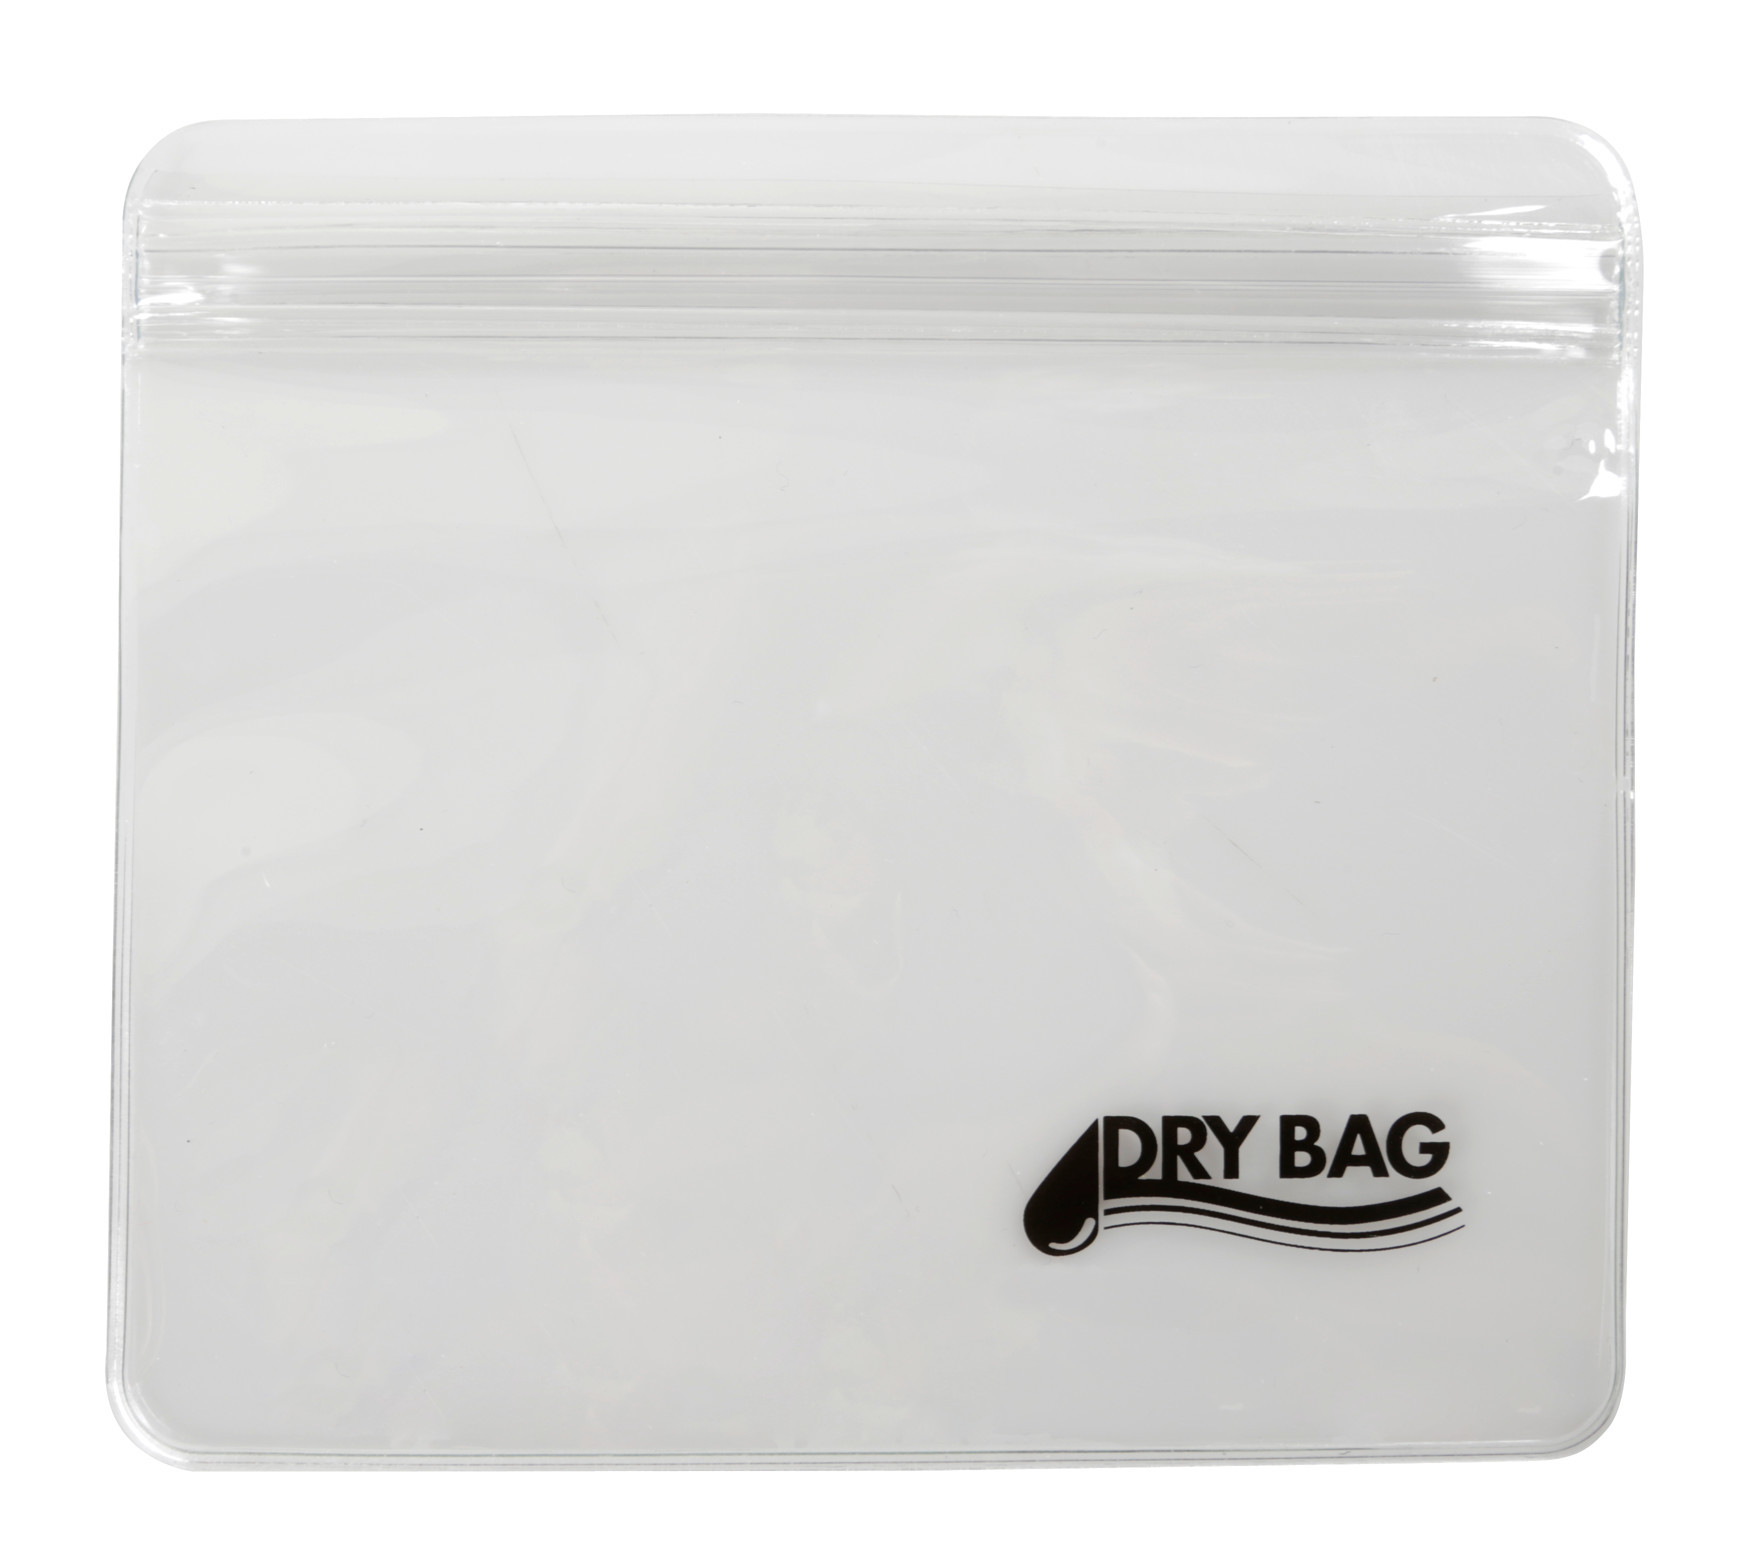 Dry-Bag, waterproof documents holder - 140x160 mm thumb